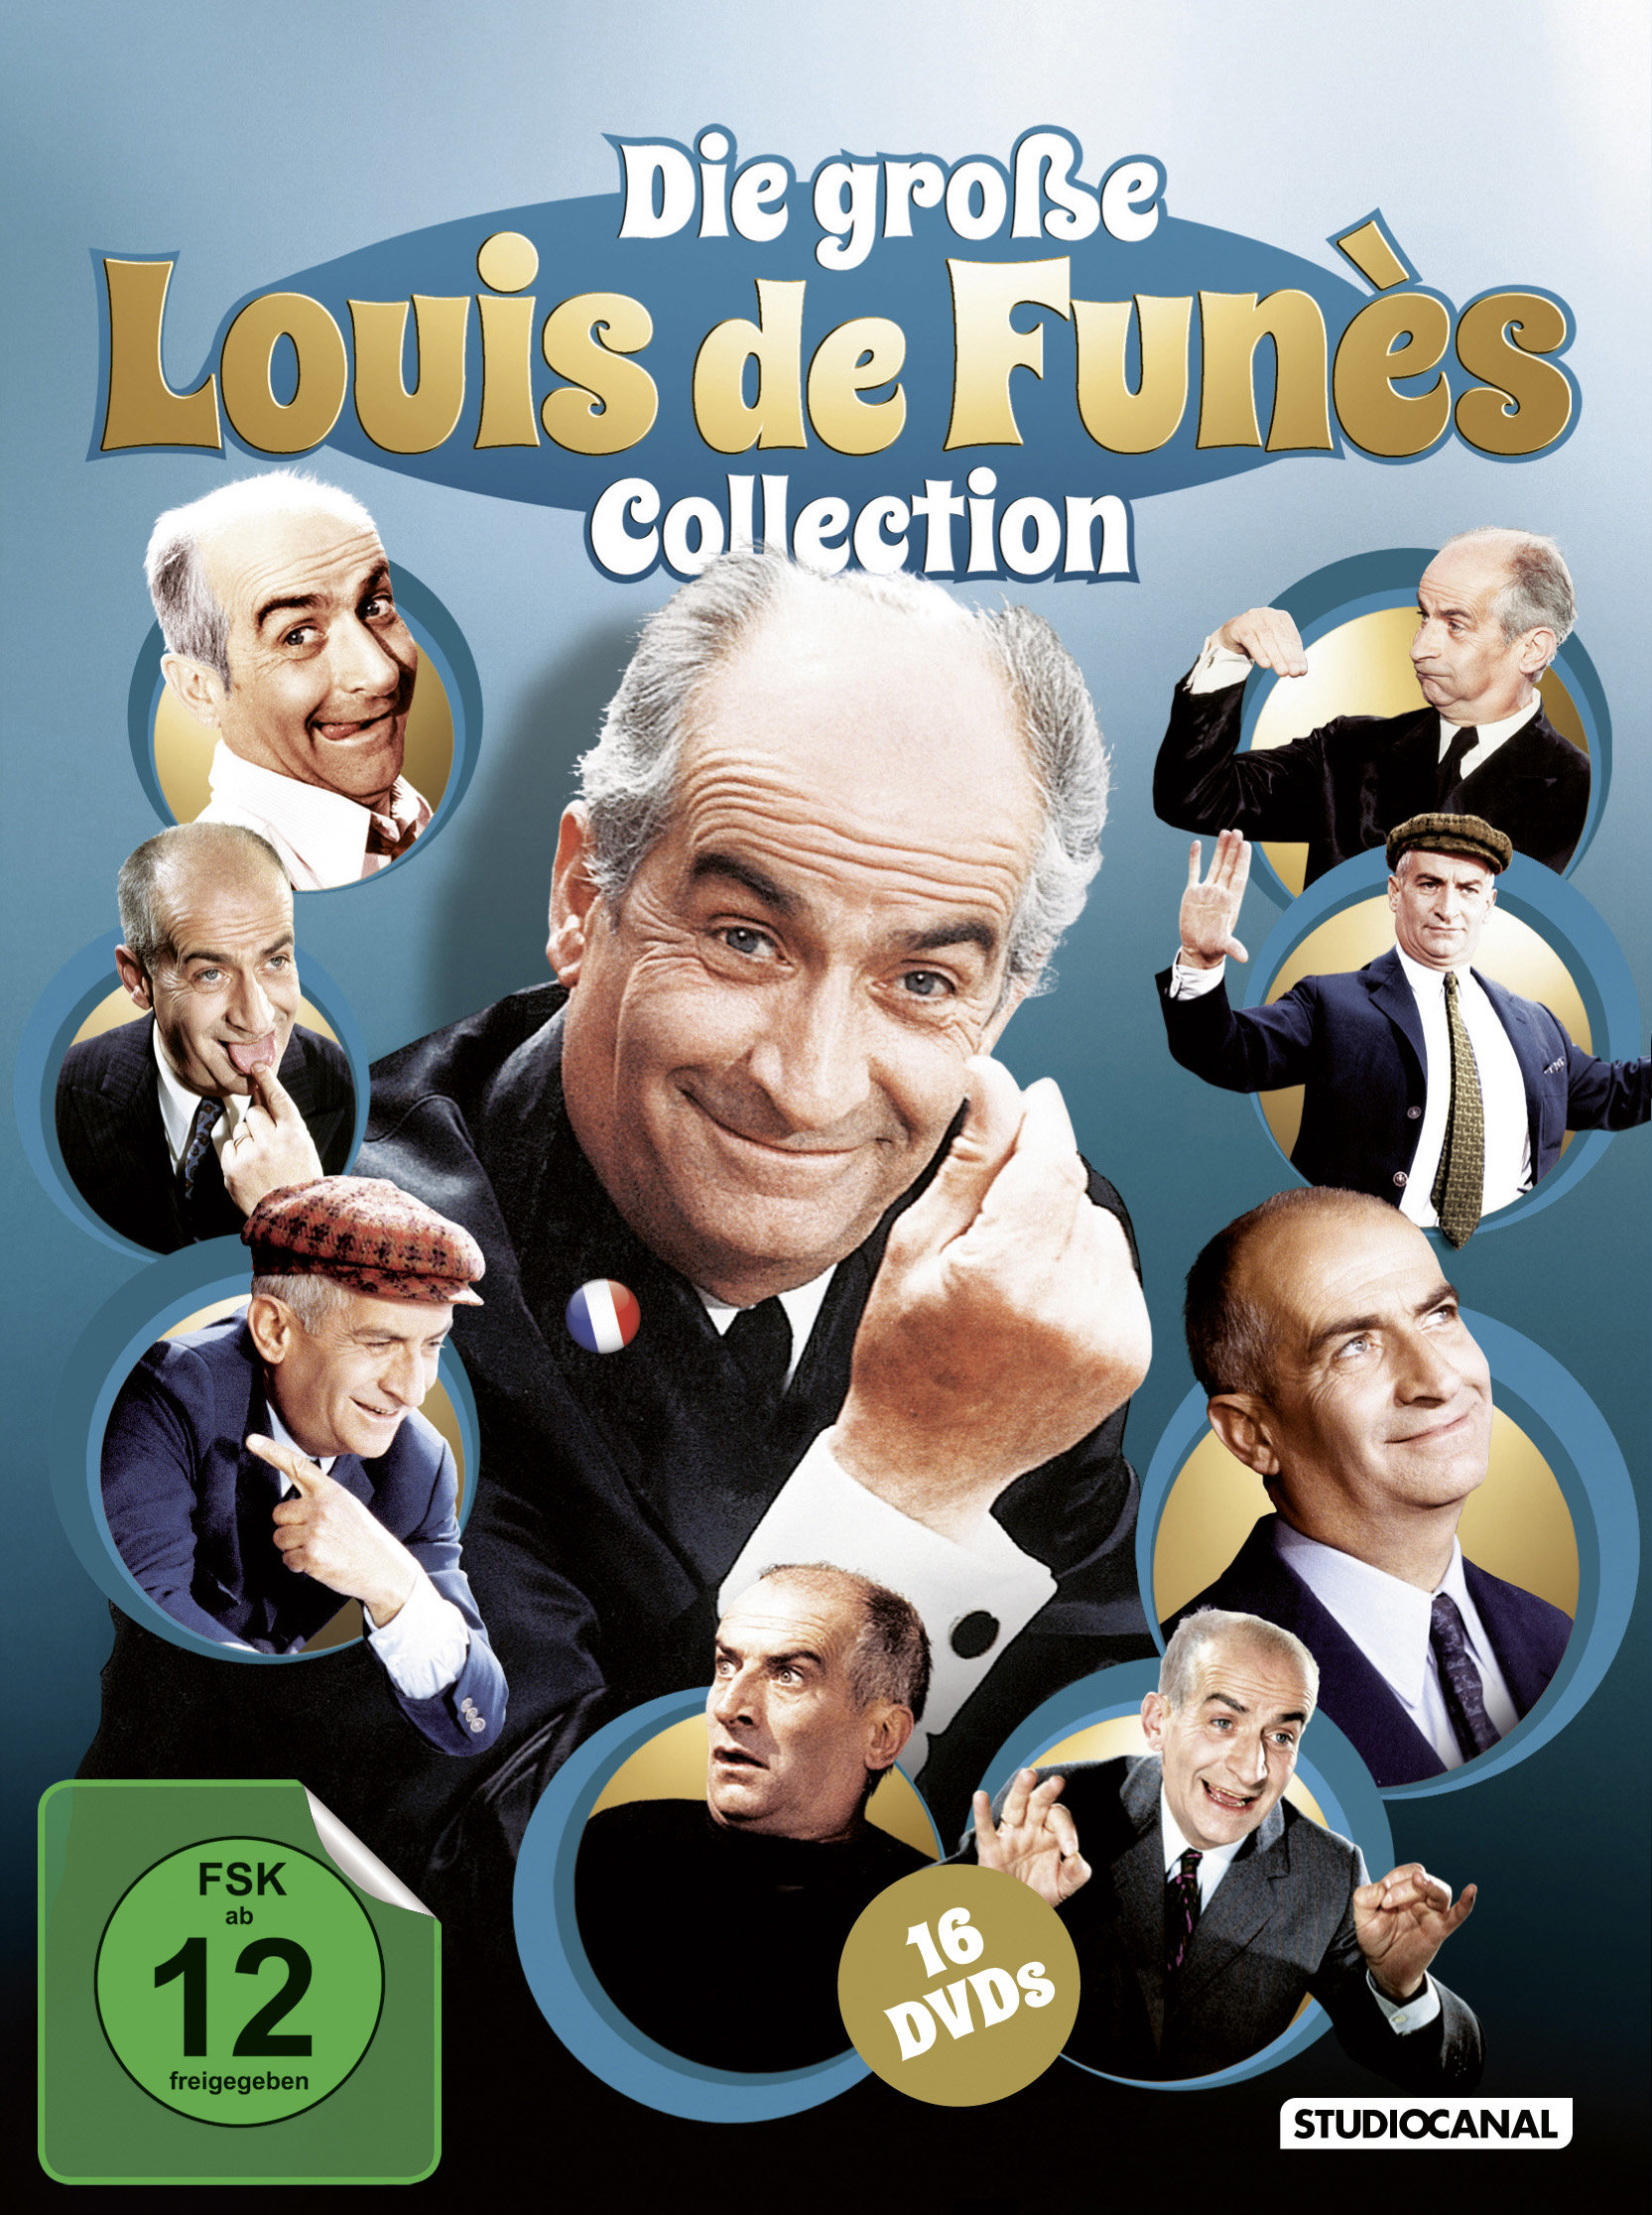 Louis de DVD Funes Collection